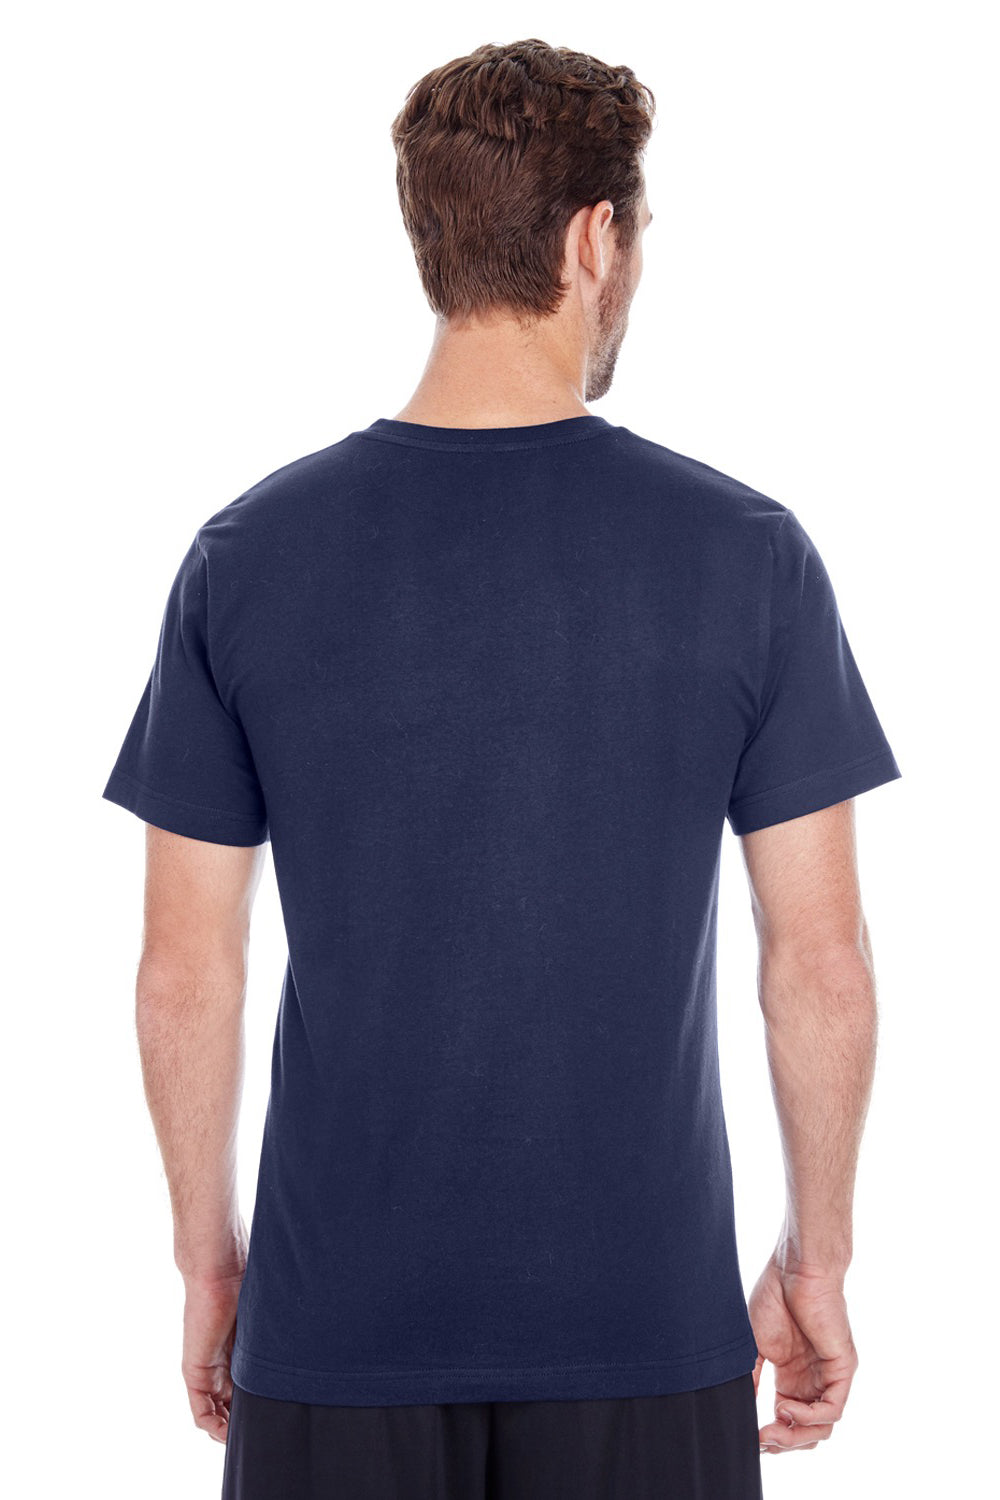 LAT 6980 Mens Premium Jersey Short Sleeve Crewneck T-Shirt Navy Blue Back